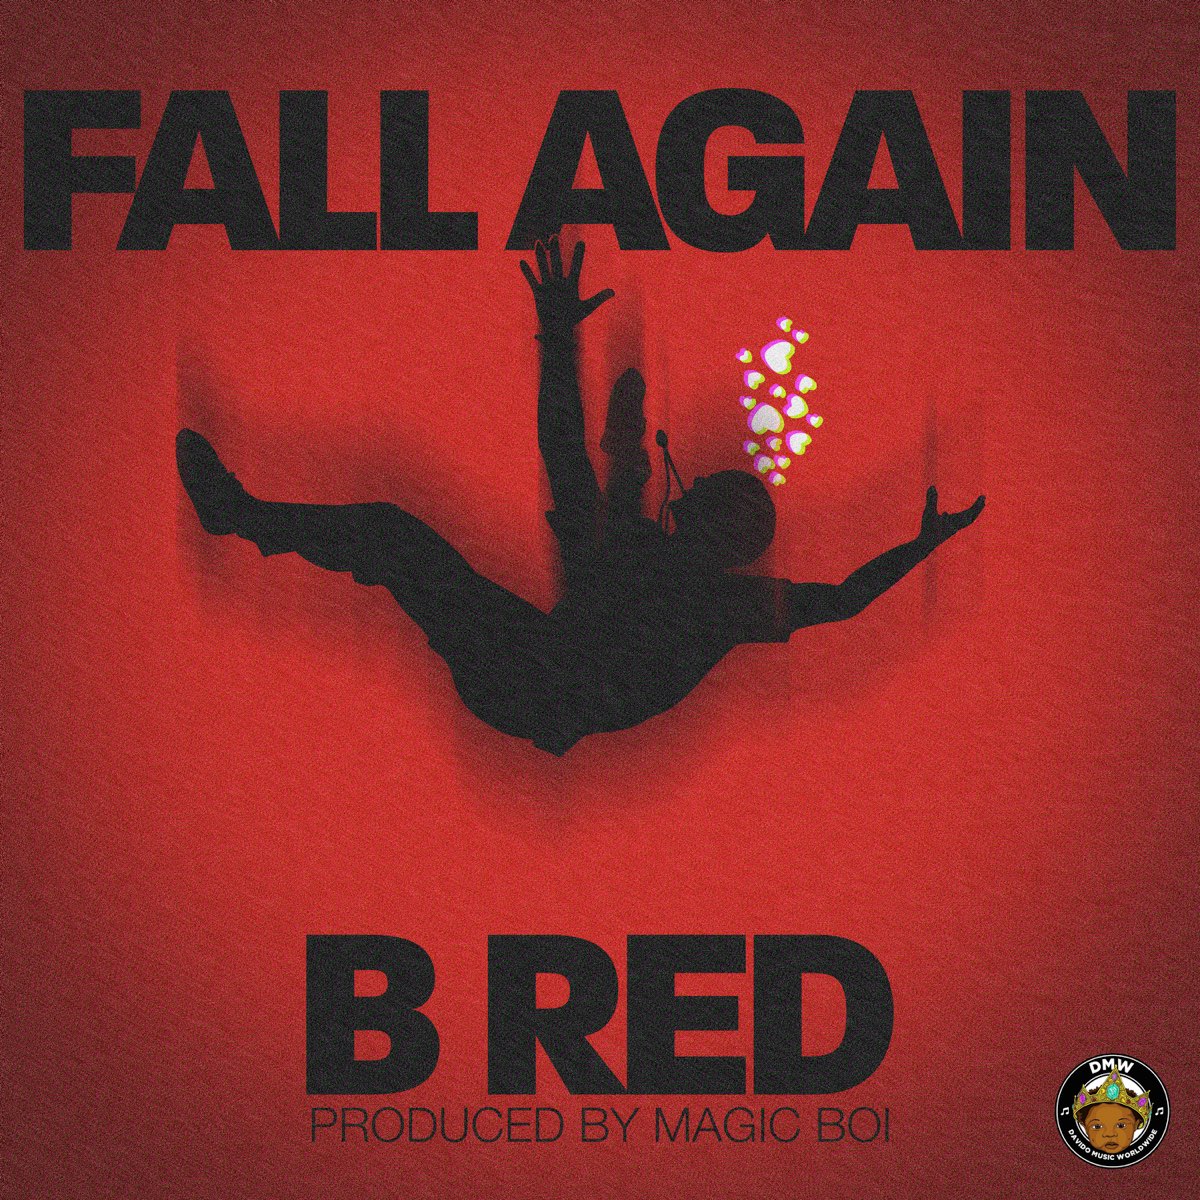 Red again. Fall again. Альбом Red. Red Fall. Мэджик бой.